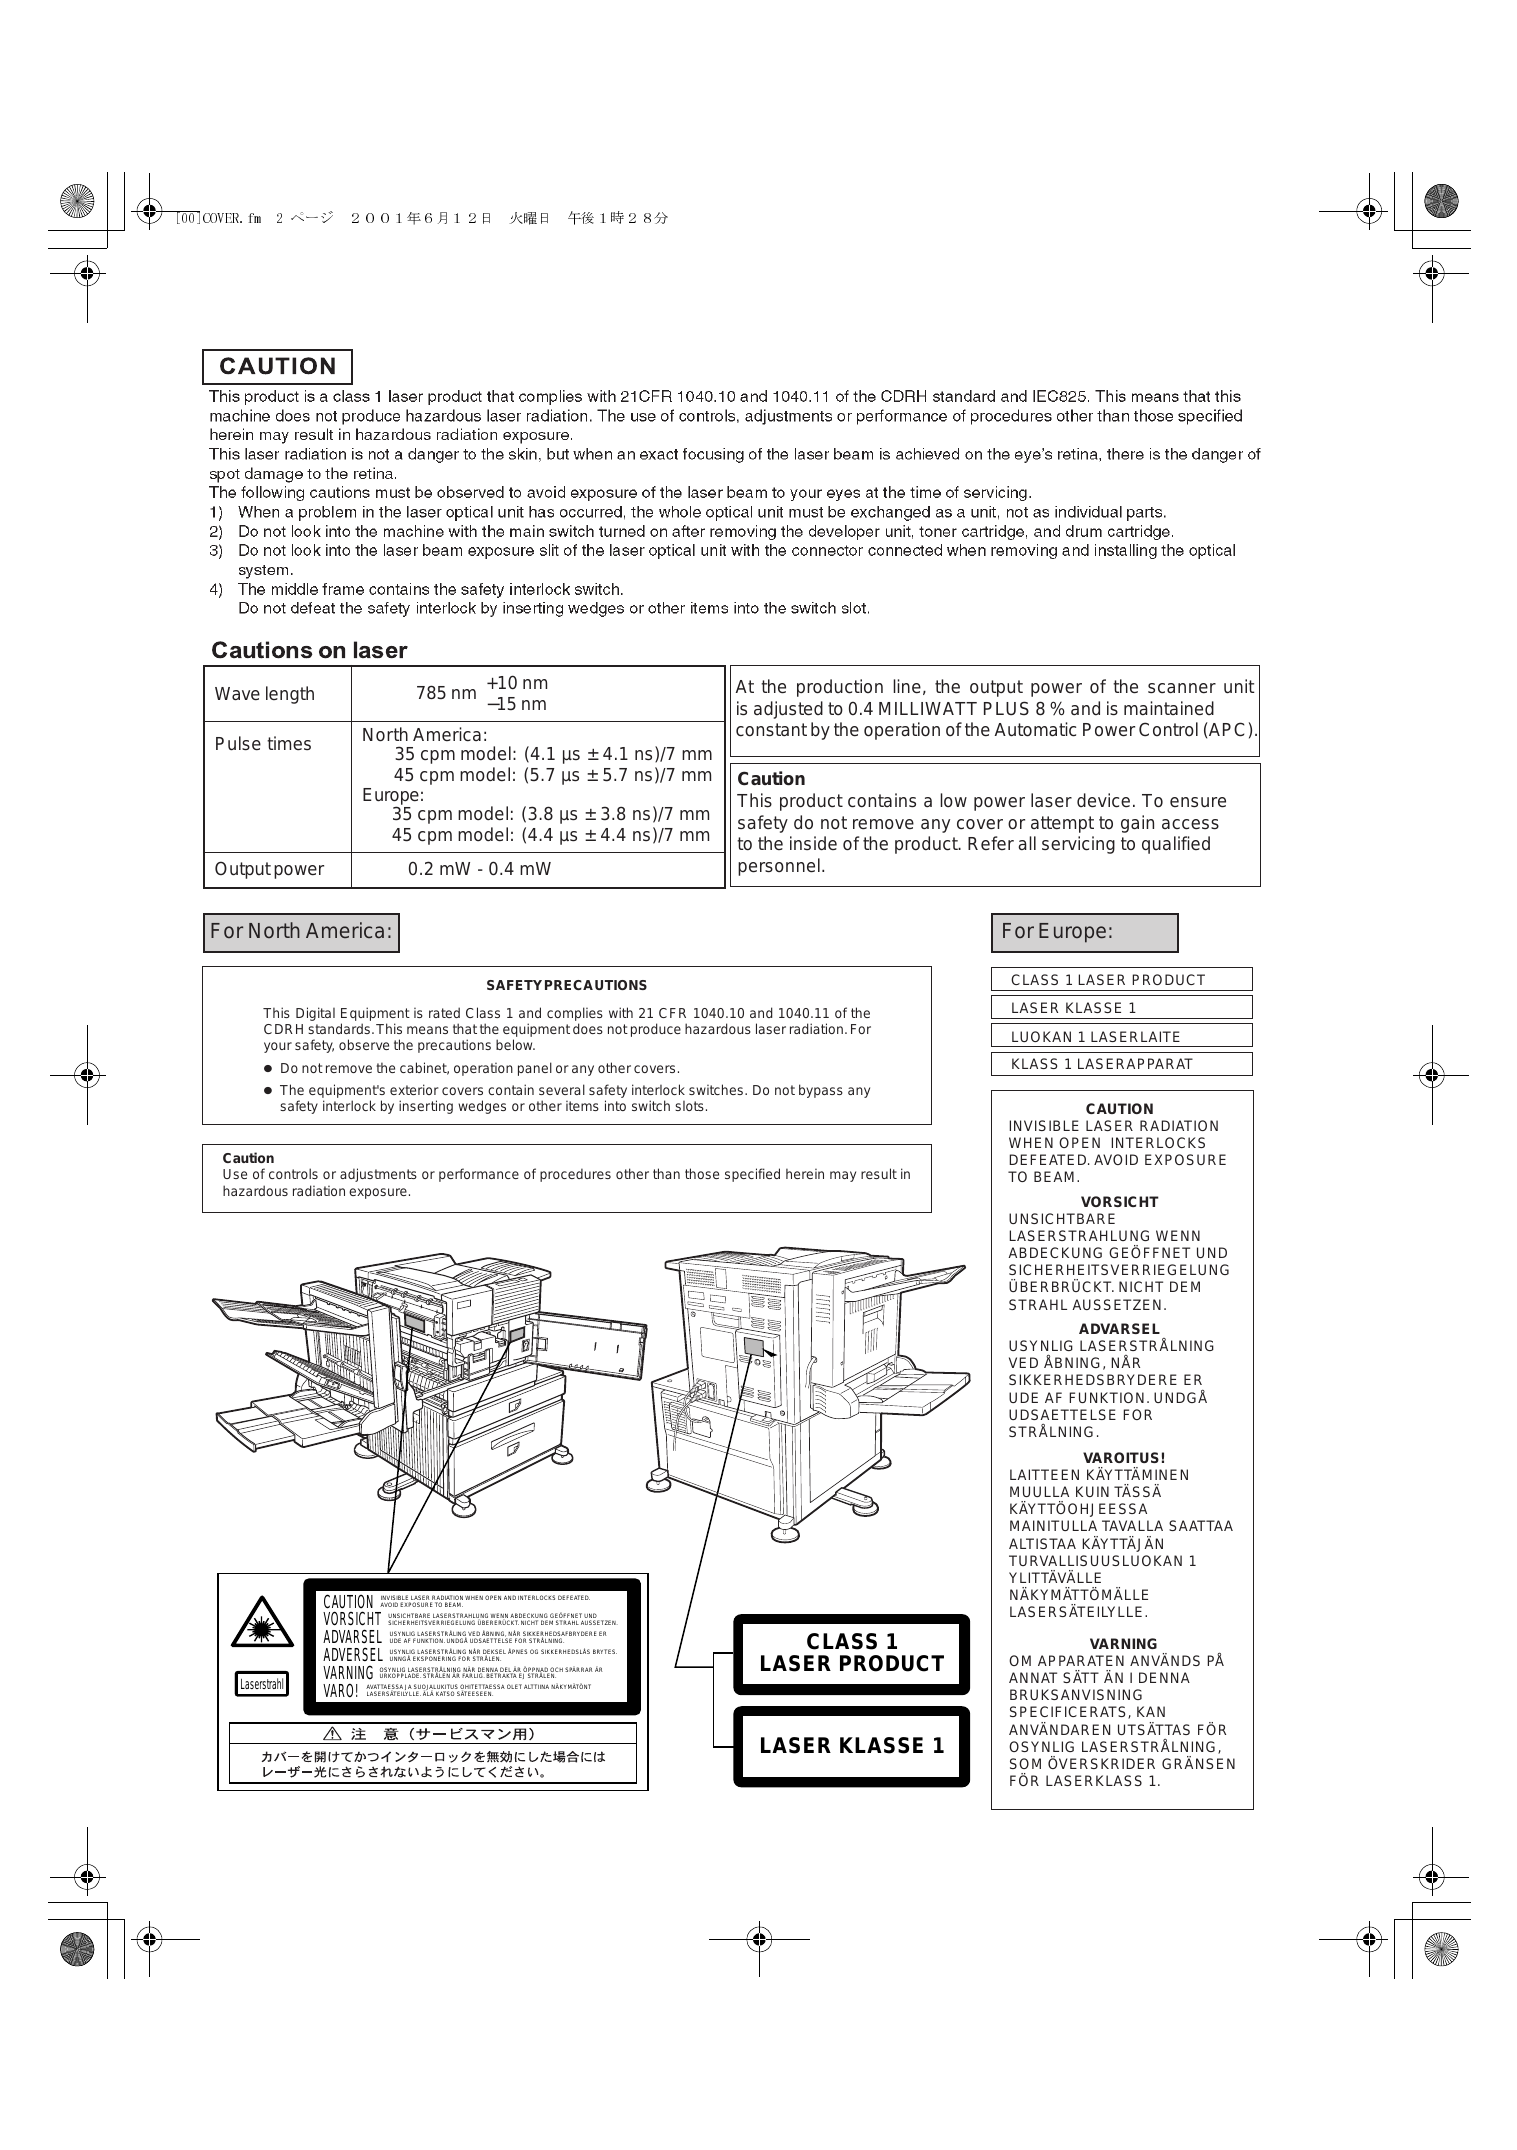 Sharp  AR M350, M450, w opt AR EF1, M11, RK1, AR-M550N, M550U, M620N, M620U, M700N, M700U laser printer service manual Preview image 4